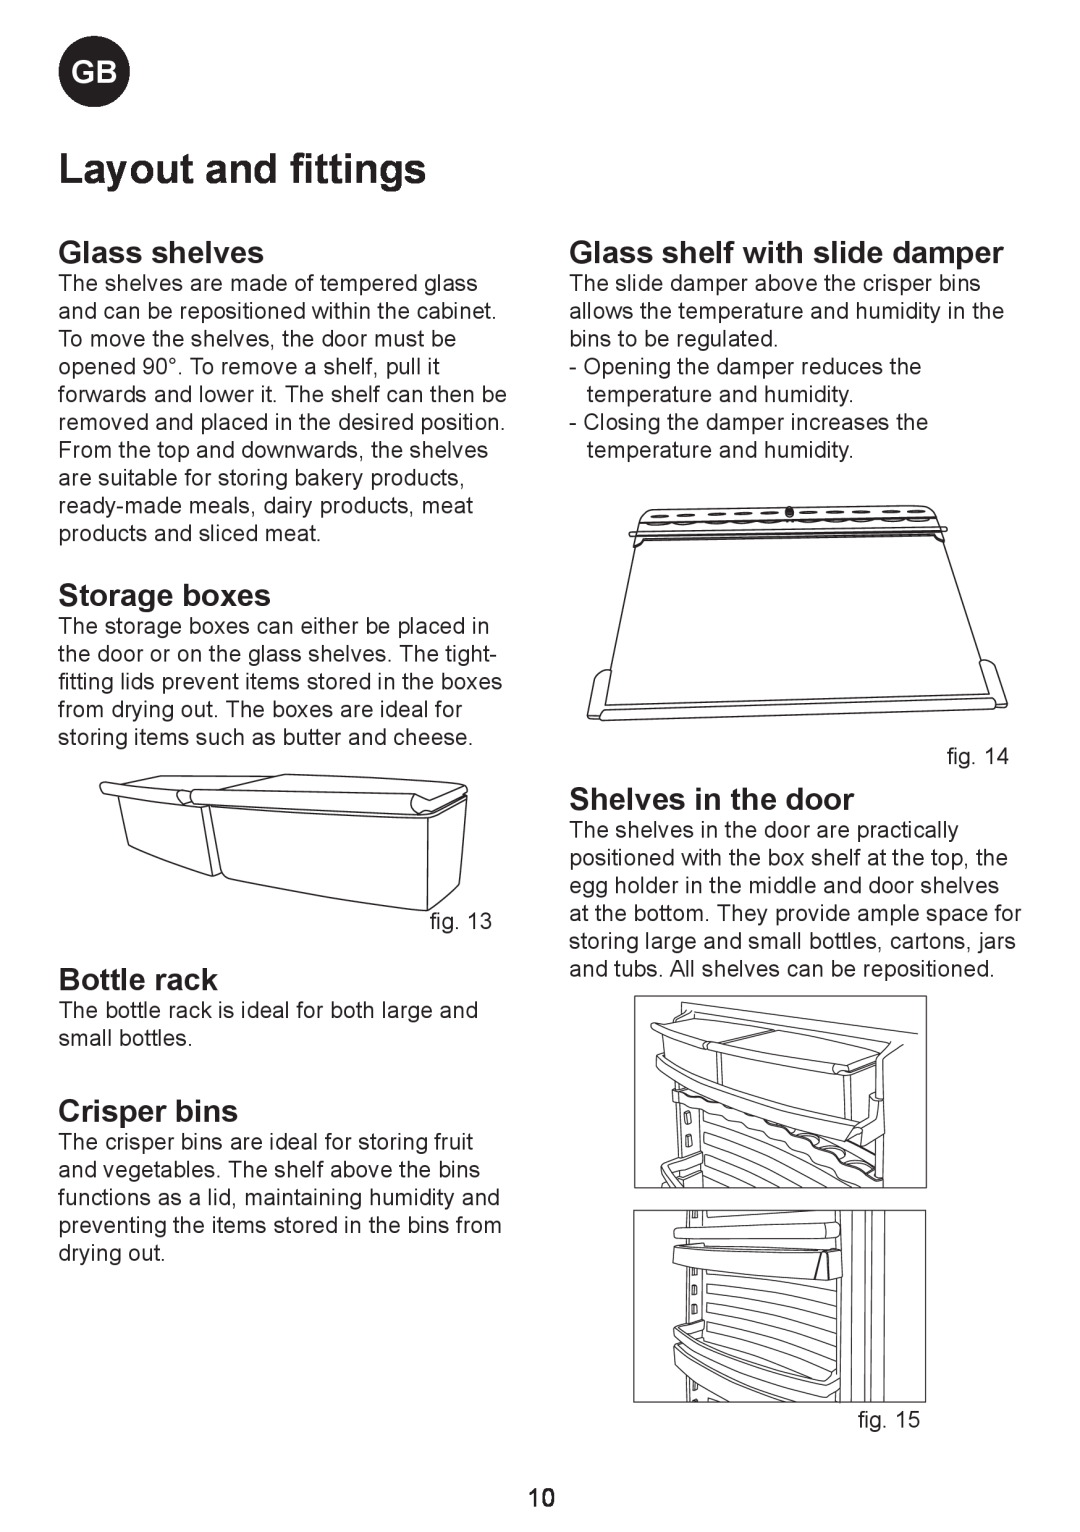 Smeg SW Range Layout and fittings, Glass shelves, Storage boxes, Bottle rack, Crisper bins, Glass shelf with slide damper 